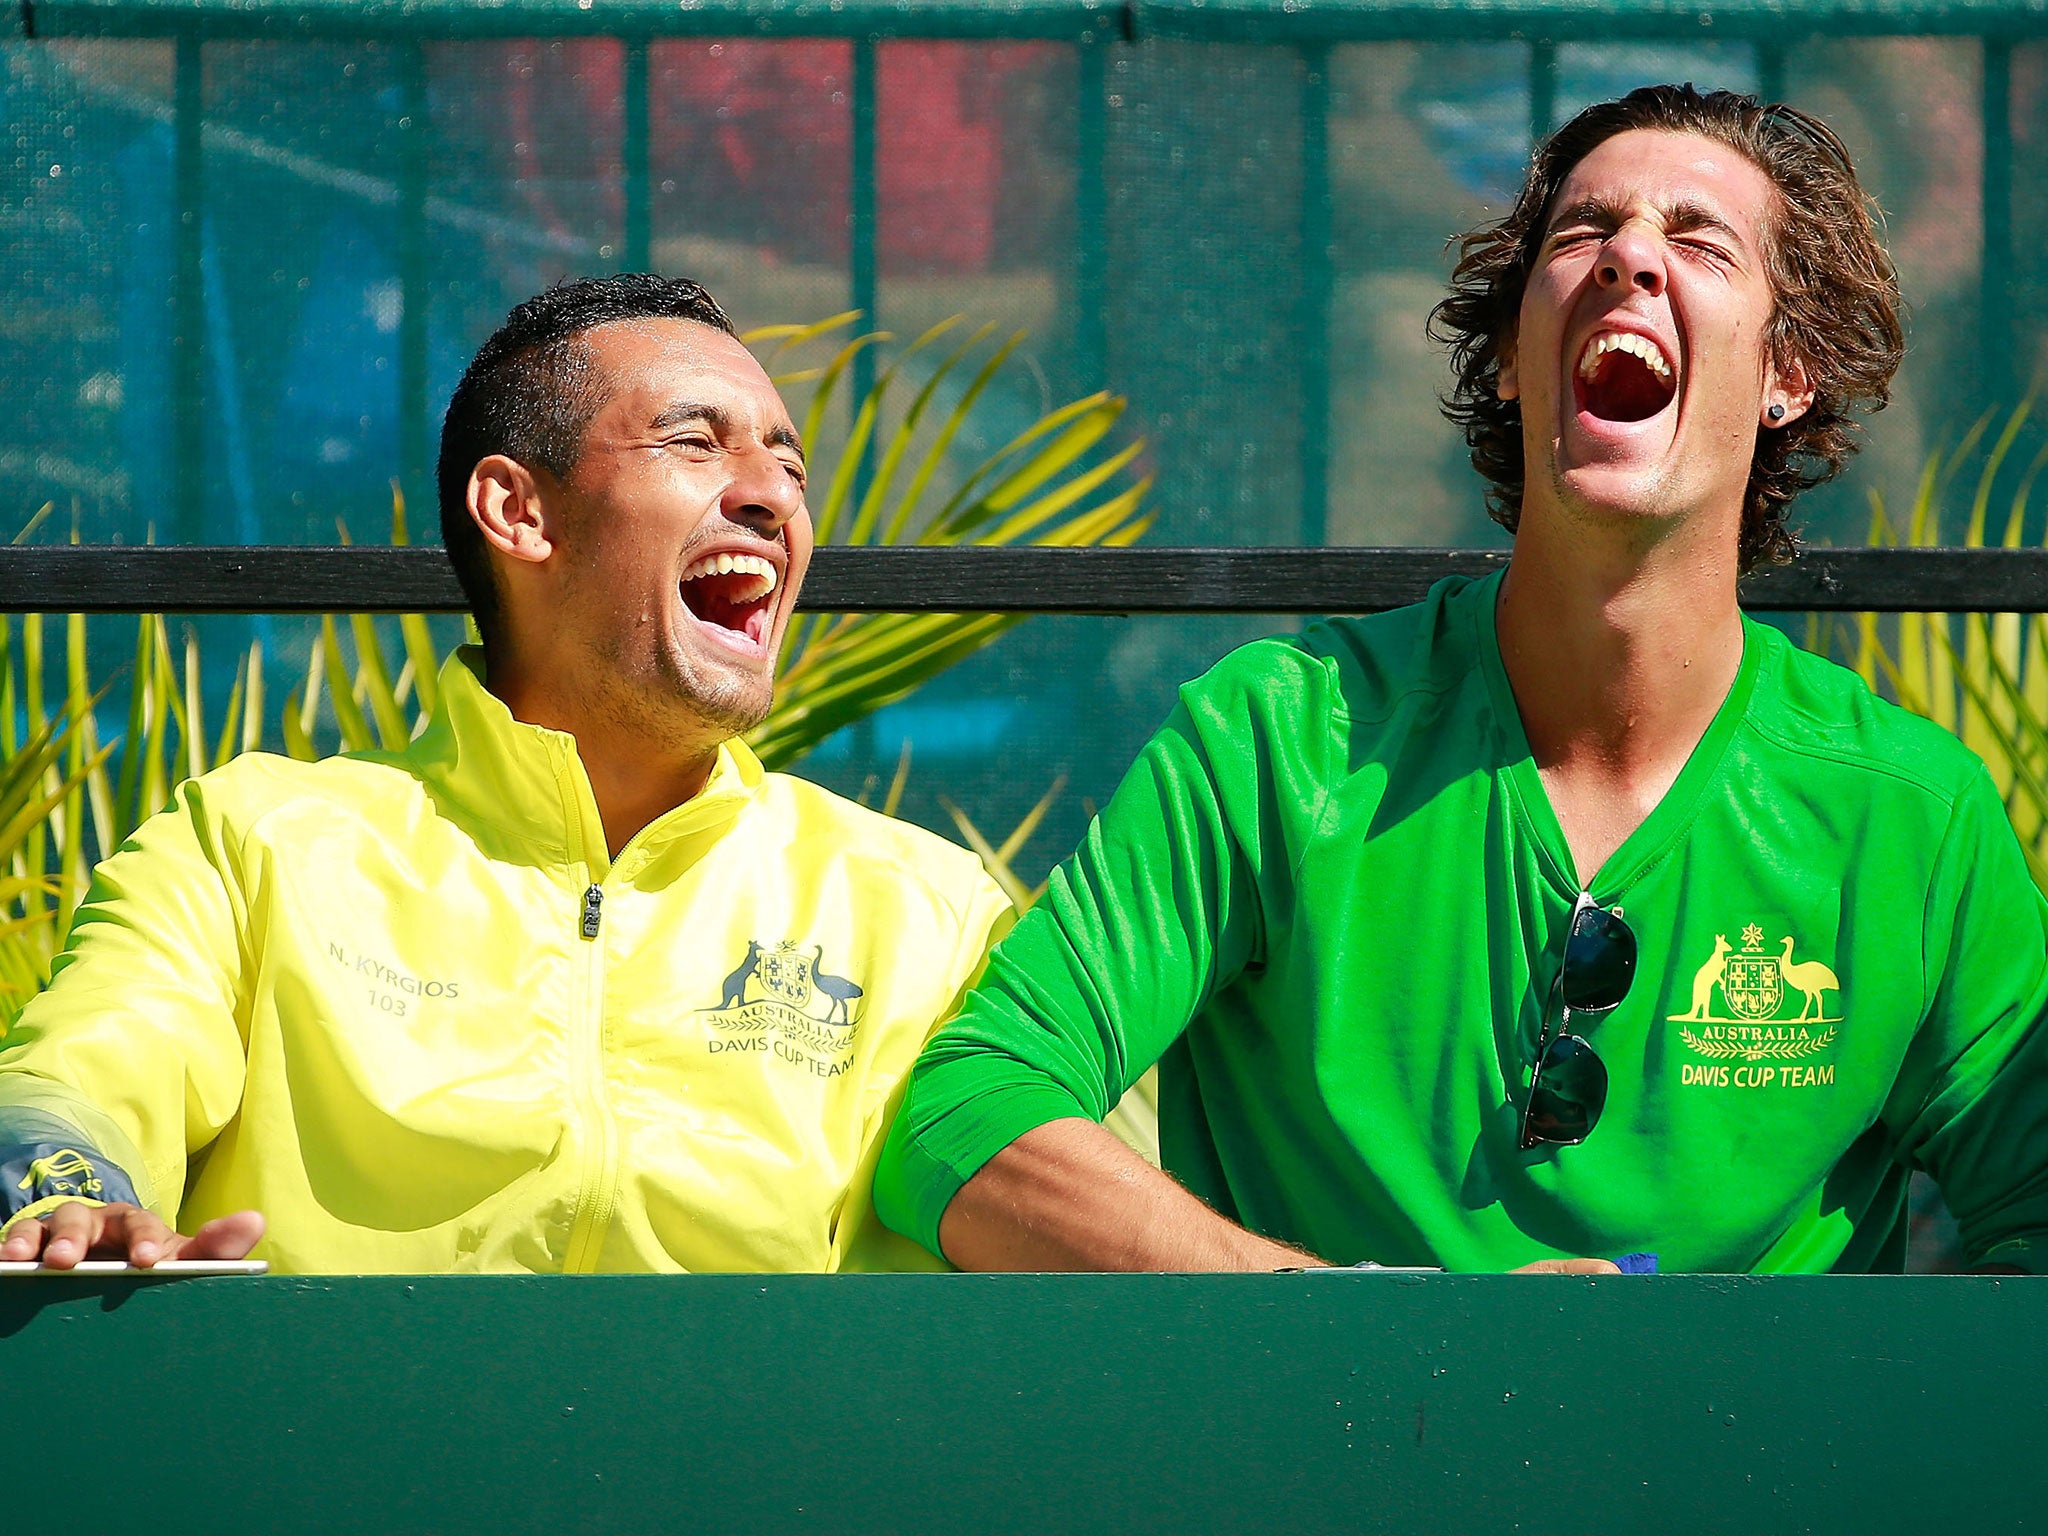 Australian tennis players and friends Nick Kyrgios (left) and Thanasi Kokkinakis share a joke